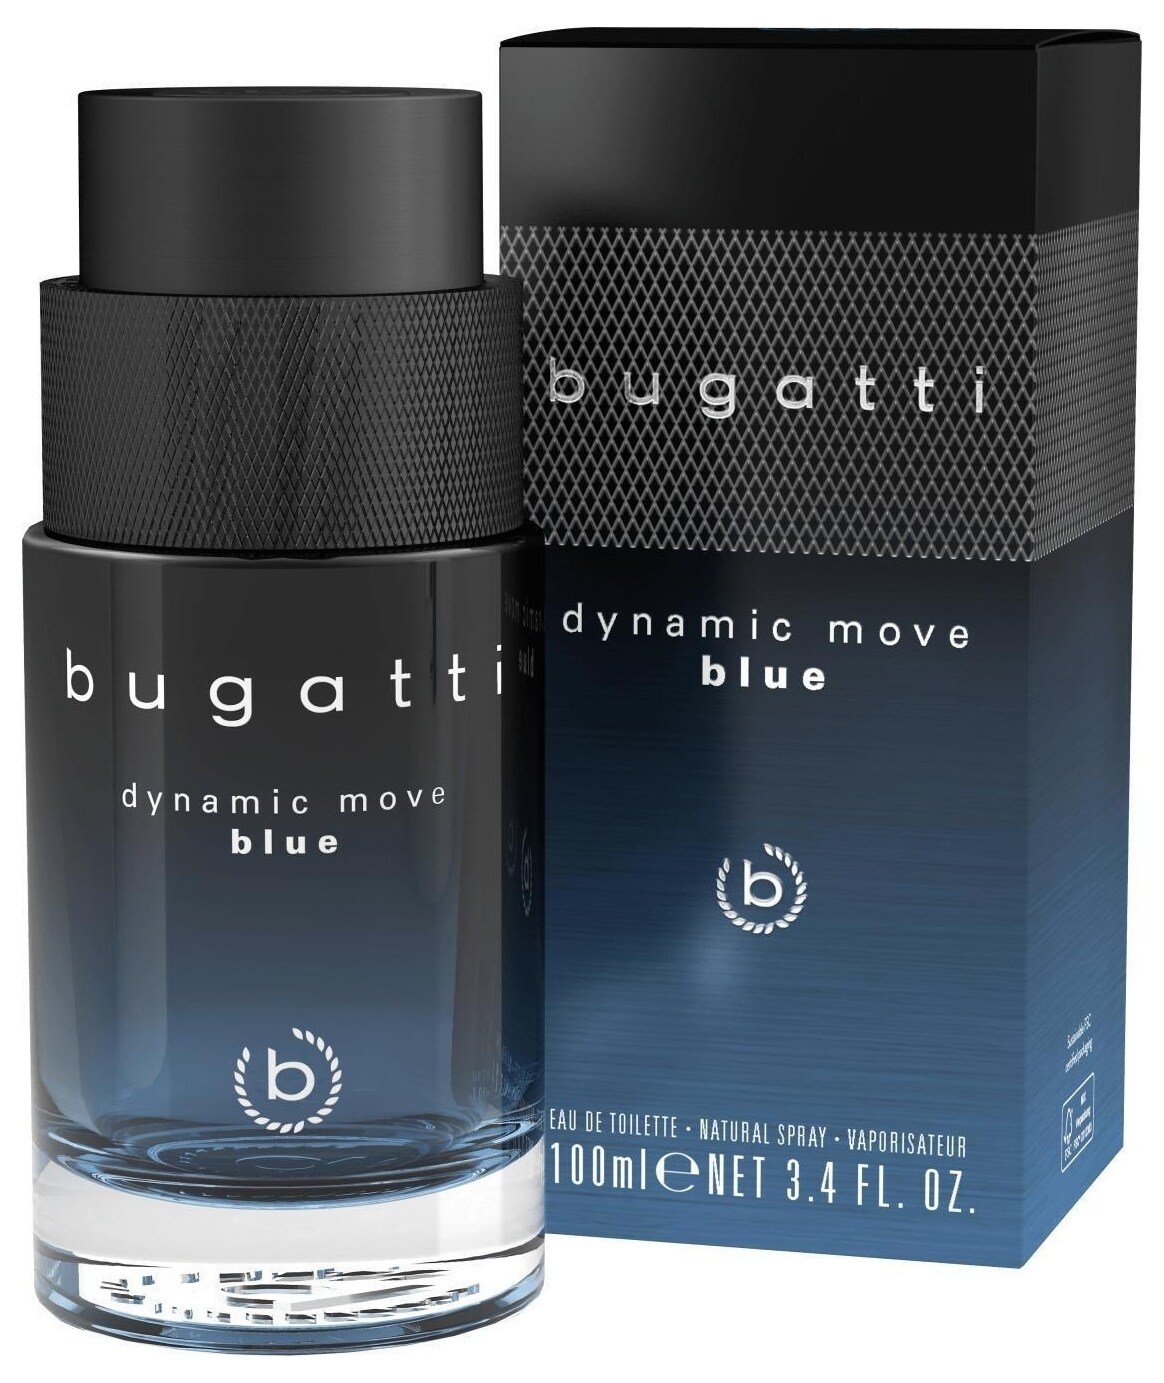 Dynamic Move Blue by bugatti Fashion » Reviews & Perfume Facts